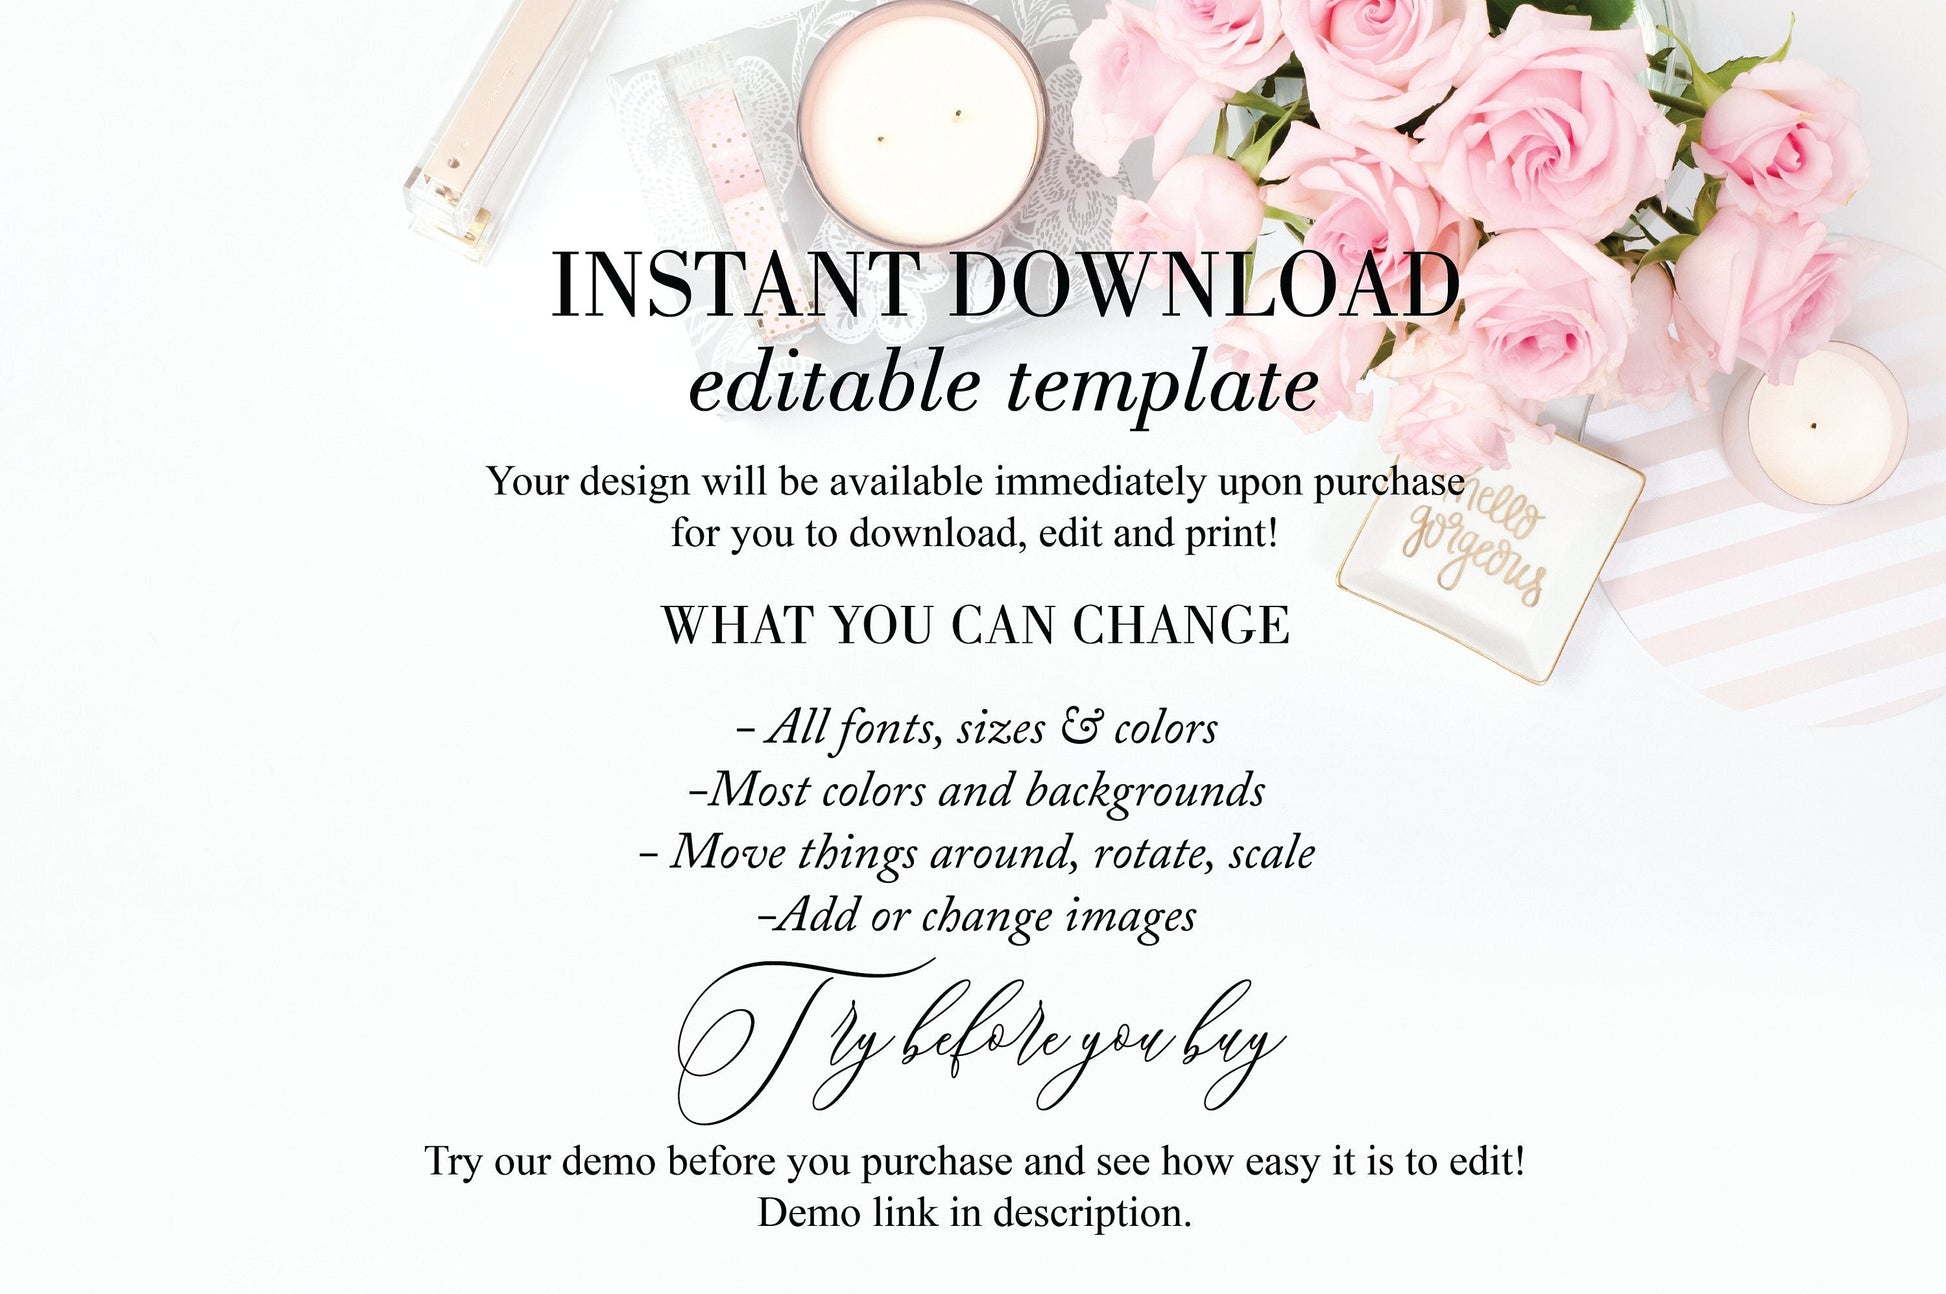 Greenery Blush Wedding Invitation Editable Template, Printable DIY Instant Download Invites, Digital Download Invitations - Tess WEDDING INVITATIONS SAVVY PAPER CO